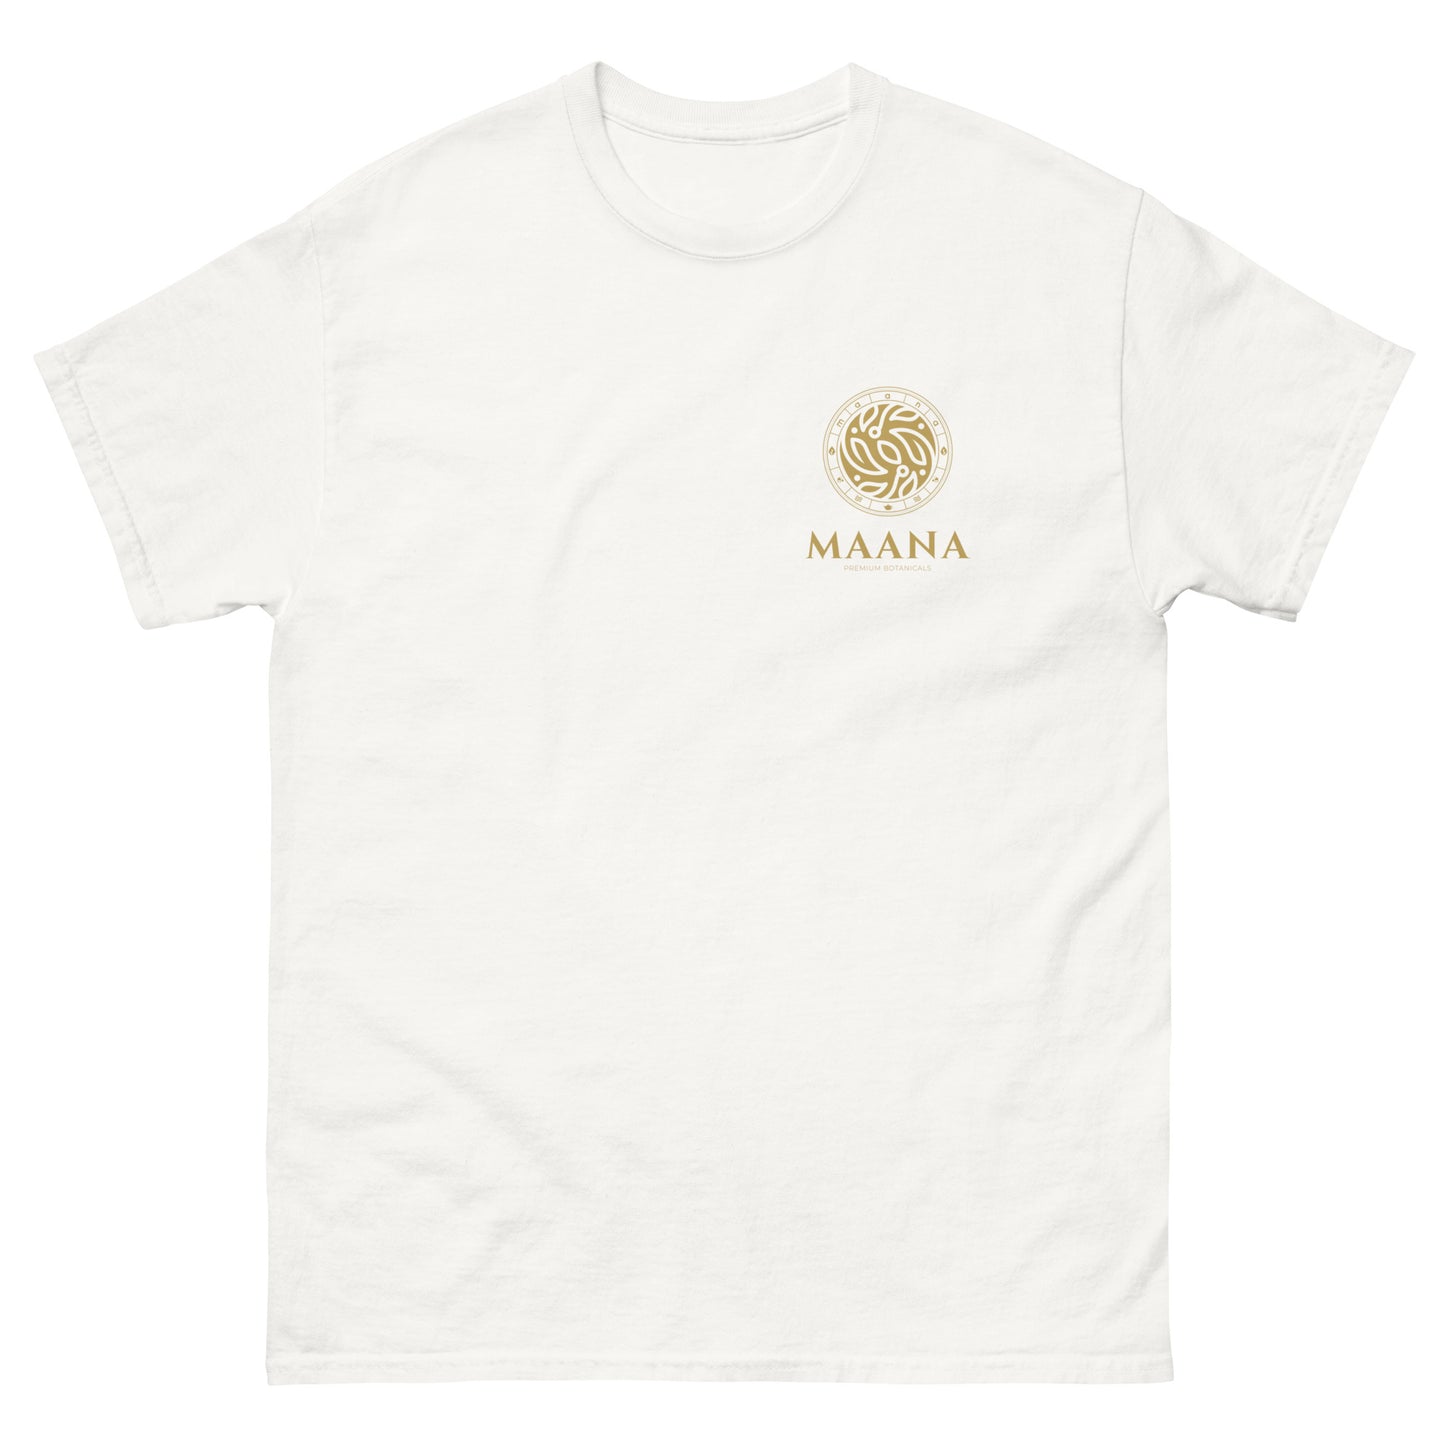 MAANA Gold Logo classic tee